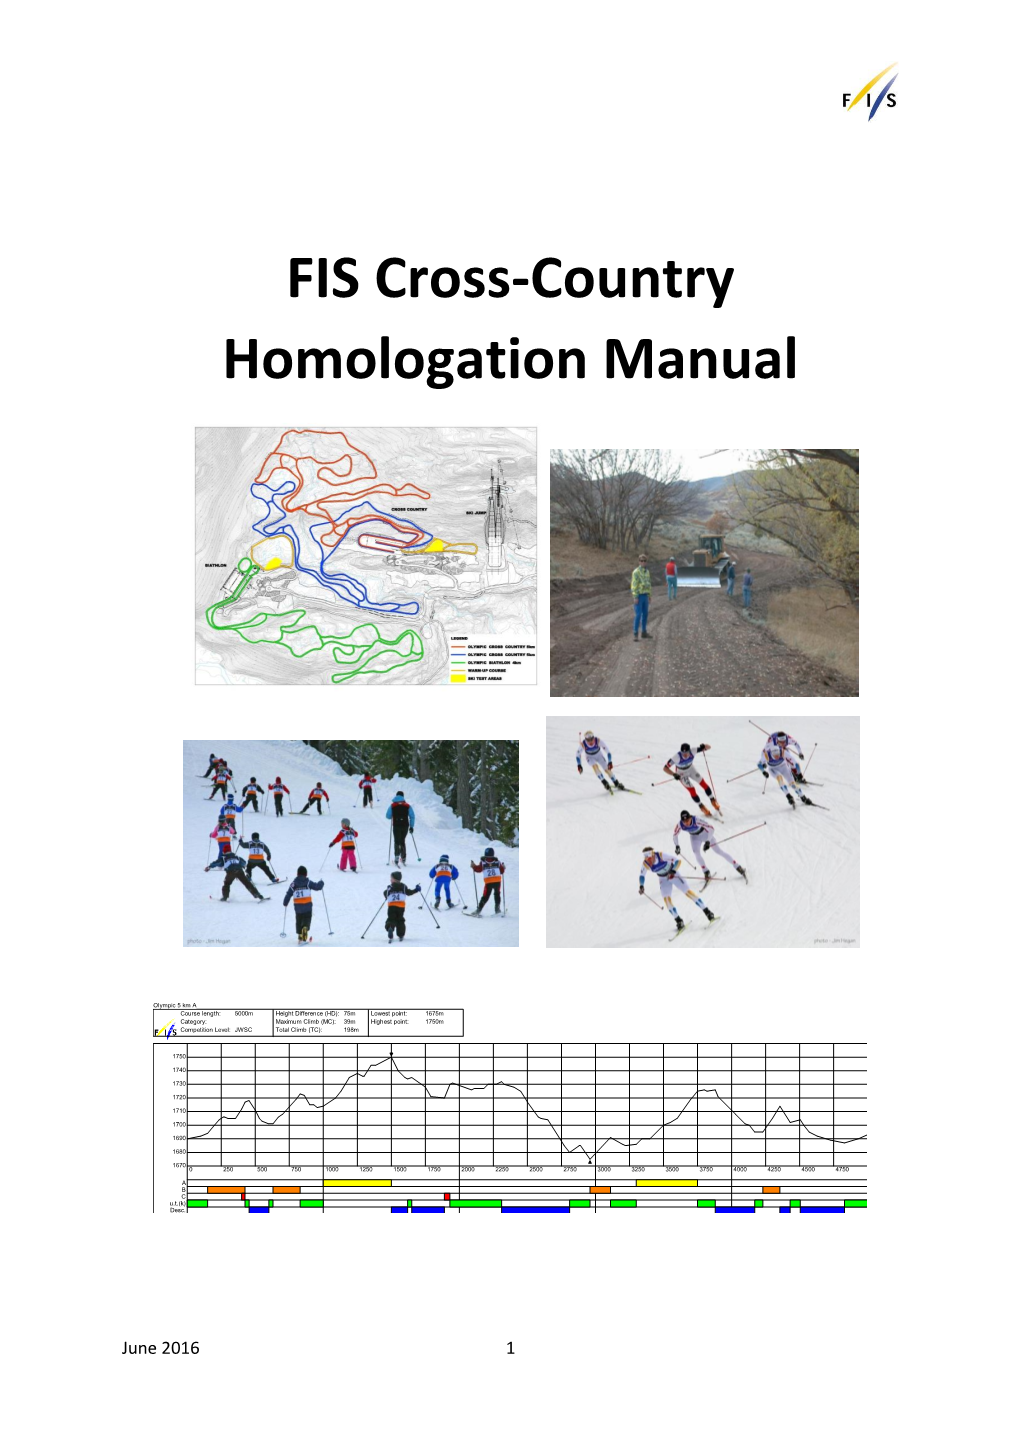 FIS Cross-Country Homologation Manual